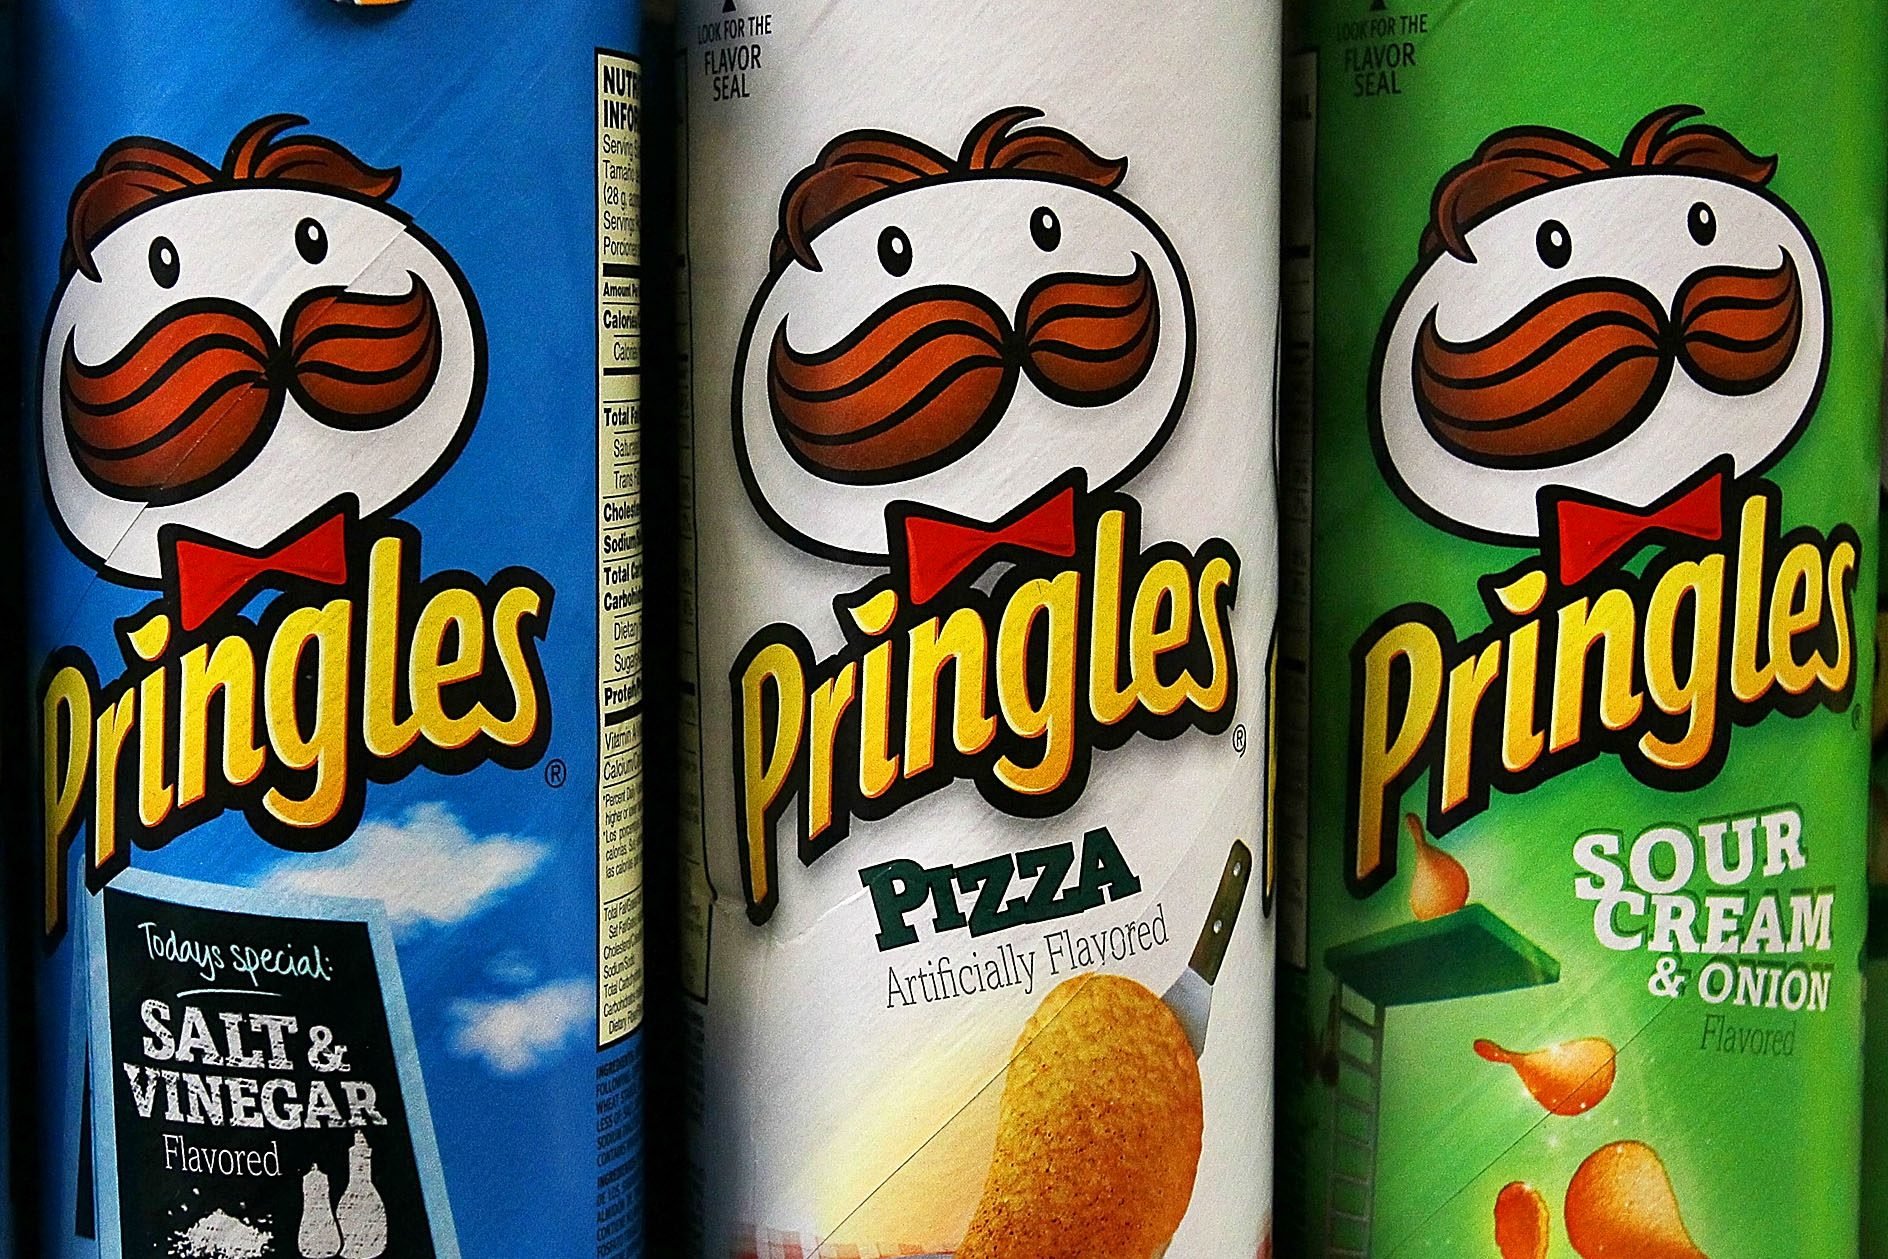 Who Is the Pringles Man? The History Behind Pringles' Mascot | Reader's ...